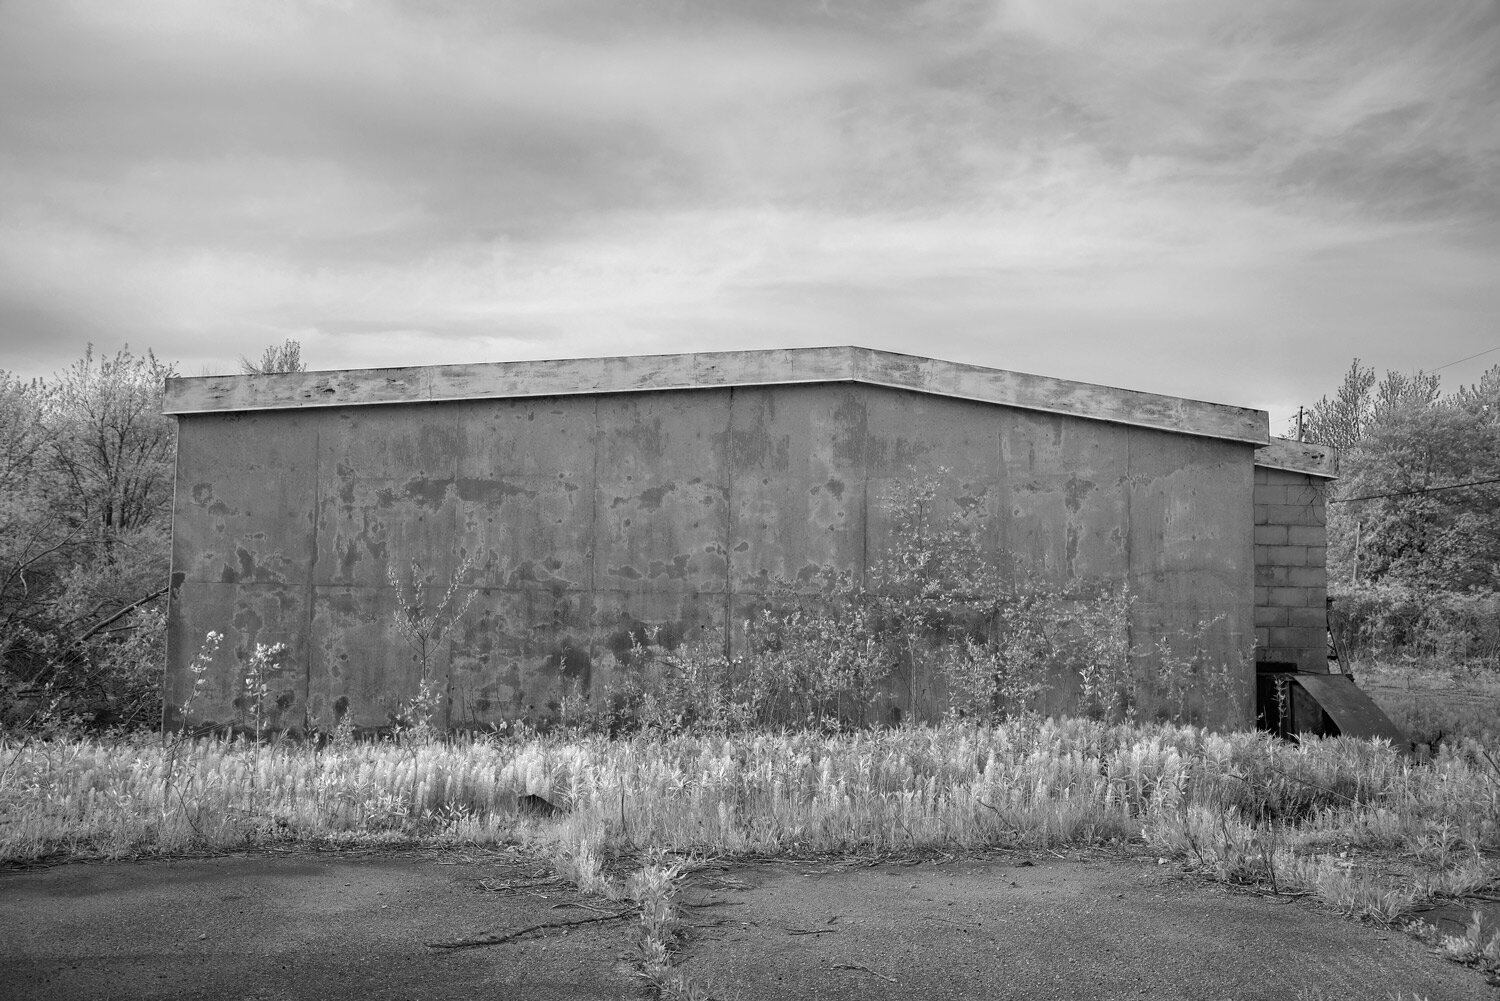  Abandoned Bunker, IN 